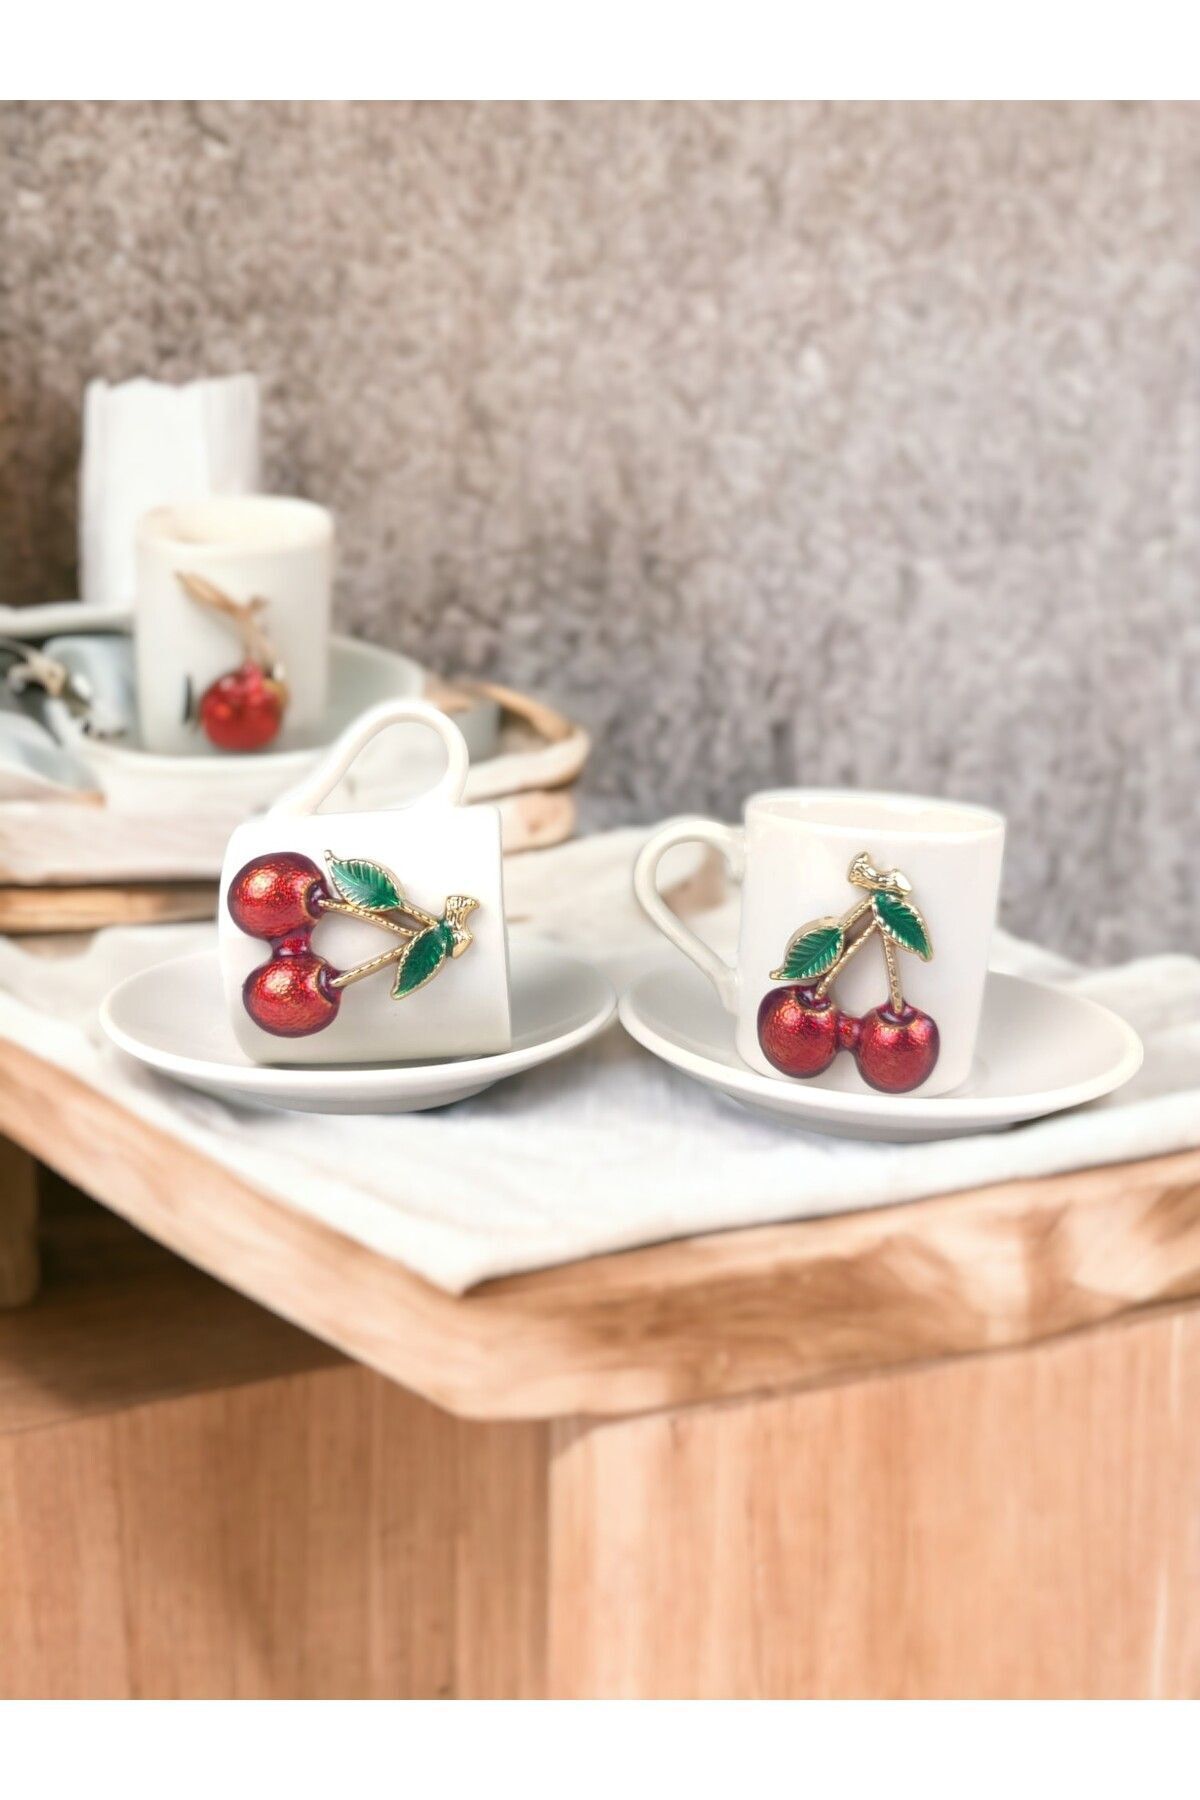 qtahya homes queen of kütahya 2'li kirazlı kahve fincan takımı kiraz çilek gül fincan silindir kahve fincan porselen